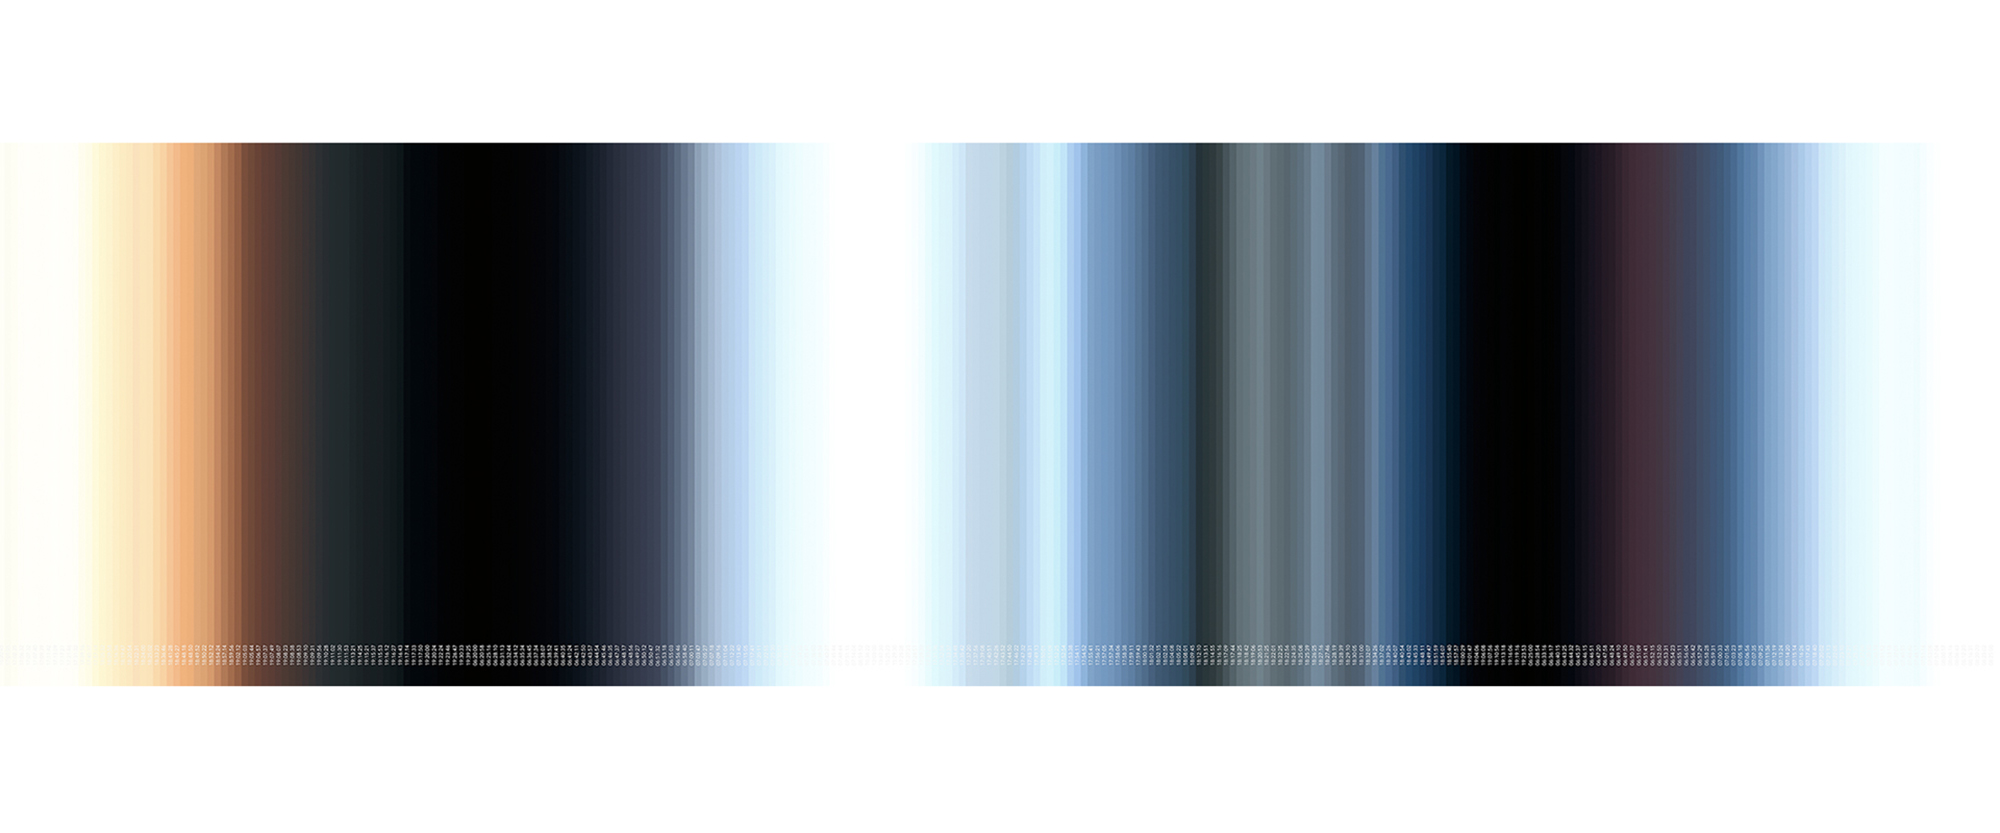 "herbst licht weiss 2012/19-2016/11", 28.8. - 24./25.9.2012 – 16:20:45 – 08:25:00, Fujicolor Crystal Archive auf Aluminium, Acrylglas, Auflage 3 Ex., 125 x 460 cm